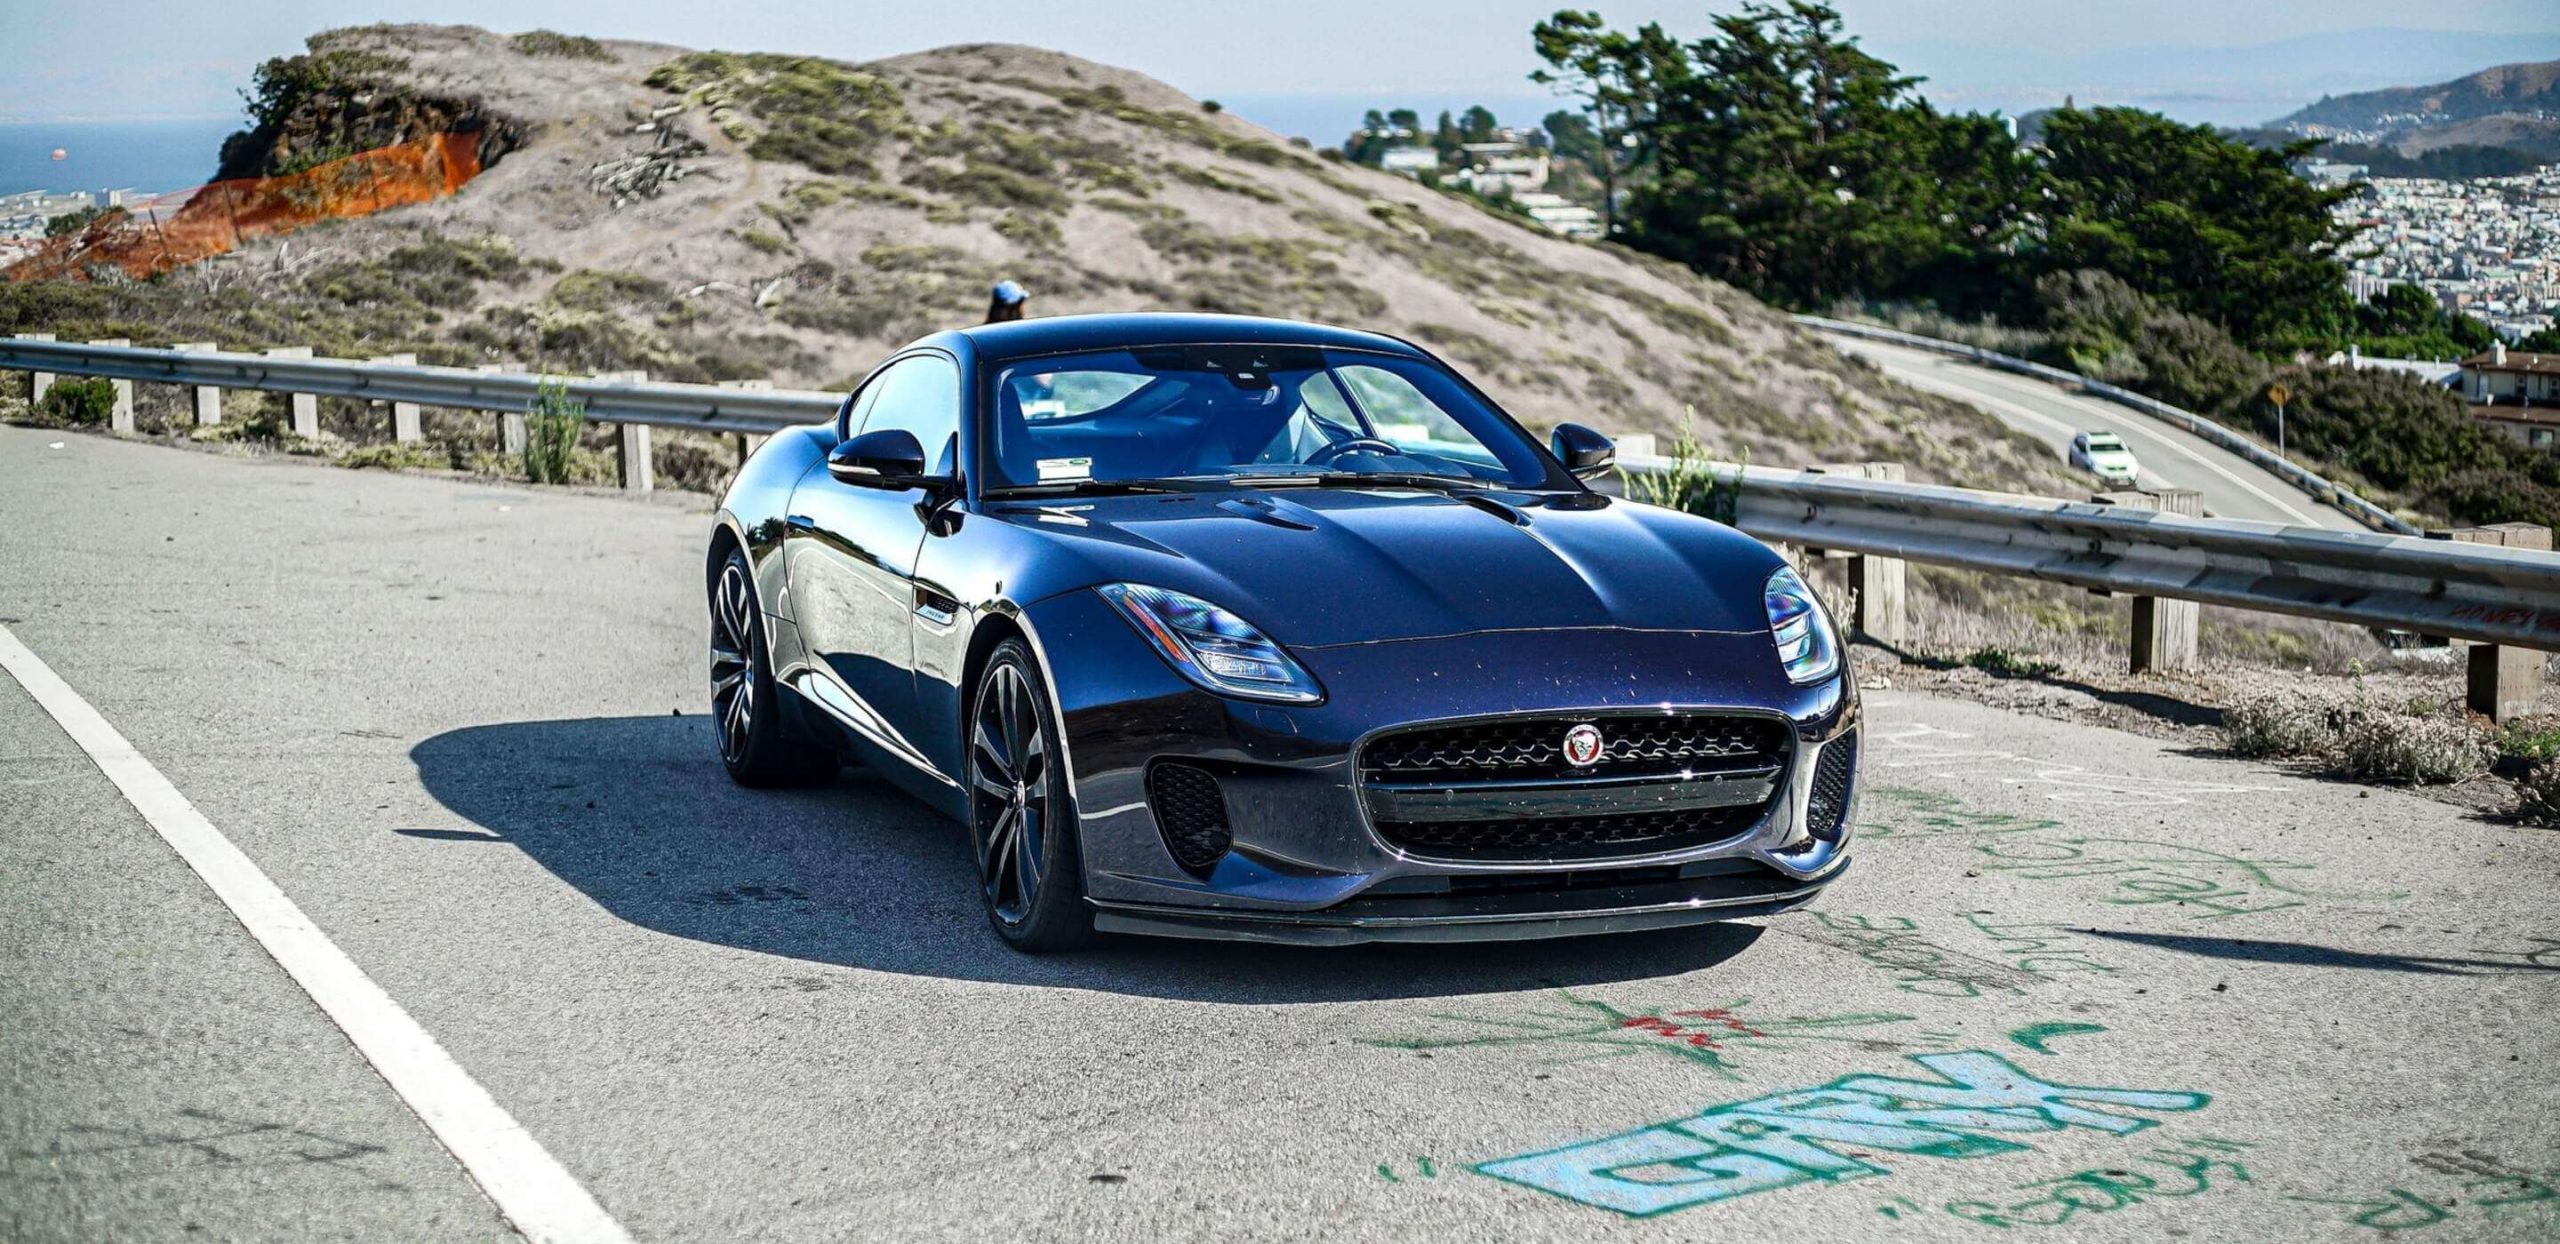 2019-jaguar-f-type-blue-featured-image